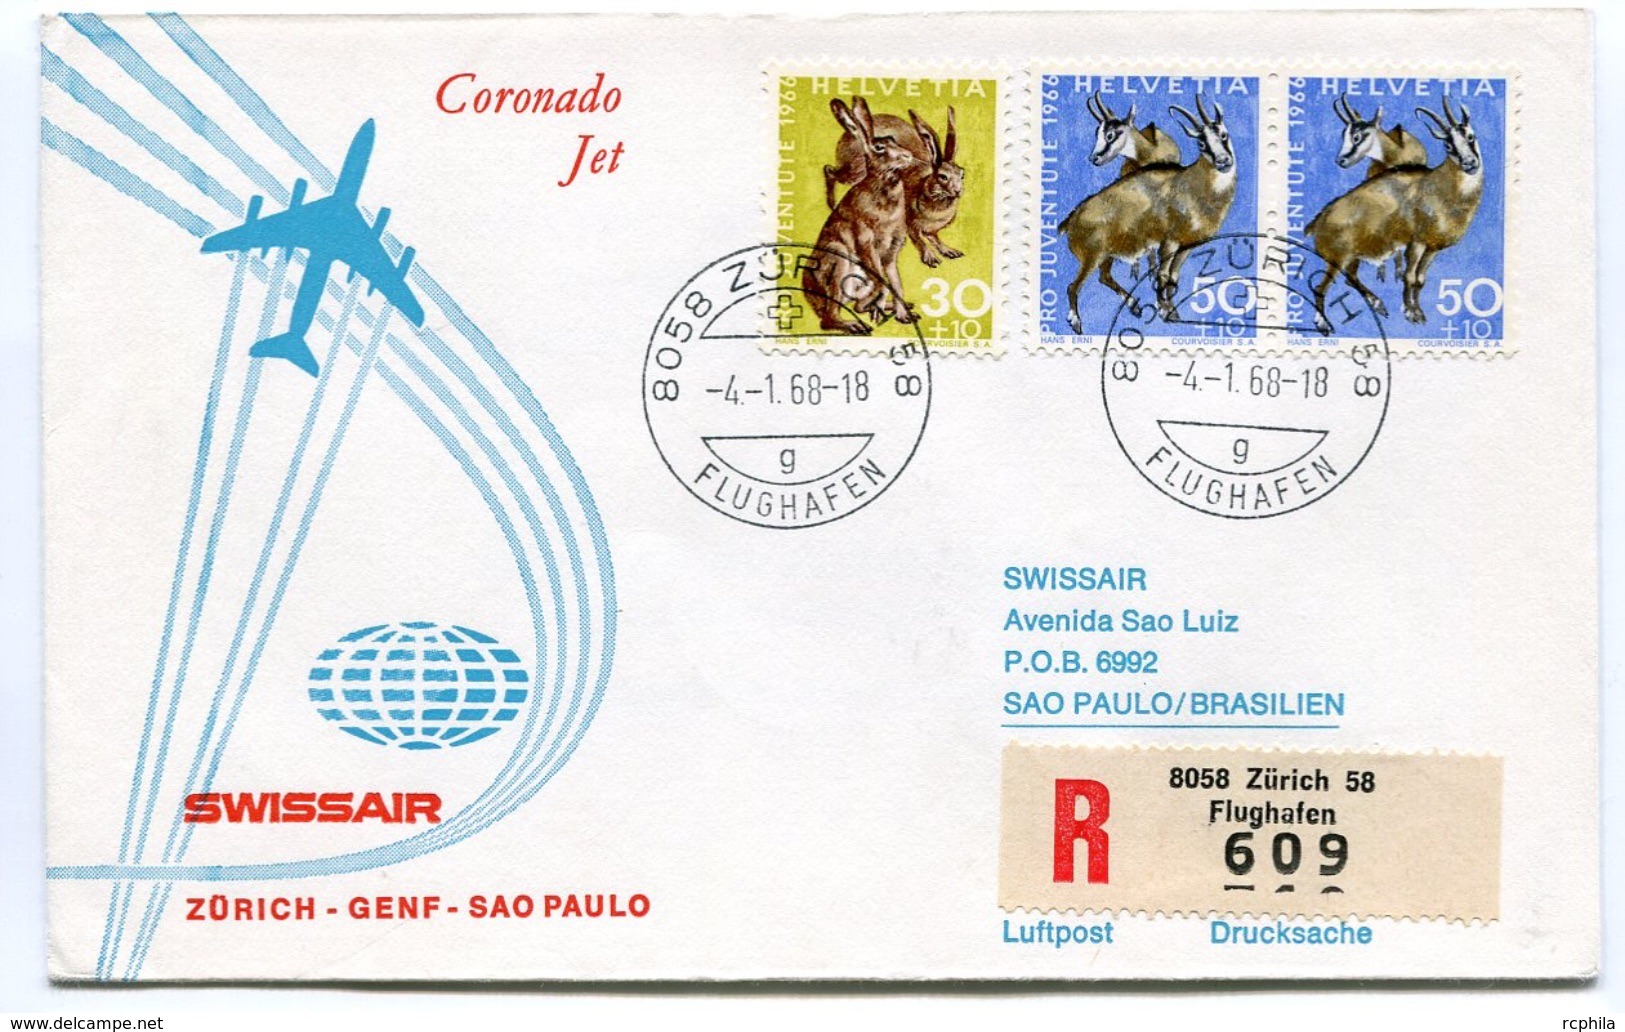 RC 6608 SUISSE SWITZERLAND 1968 1er VOL SWISSAIR ZURICH - SAO PAULO BRESIL FFC LETTRE COVER - First Flight Covers